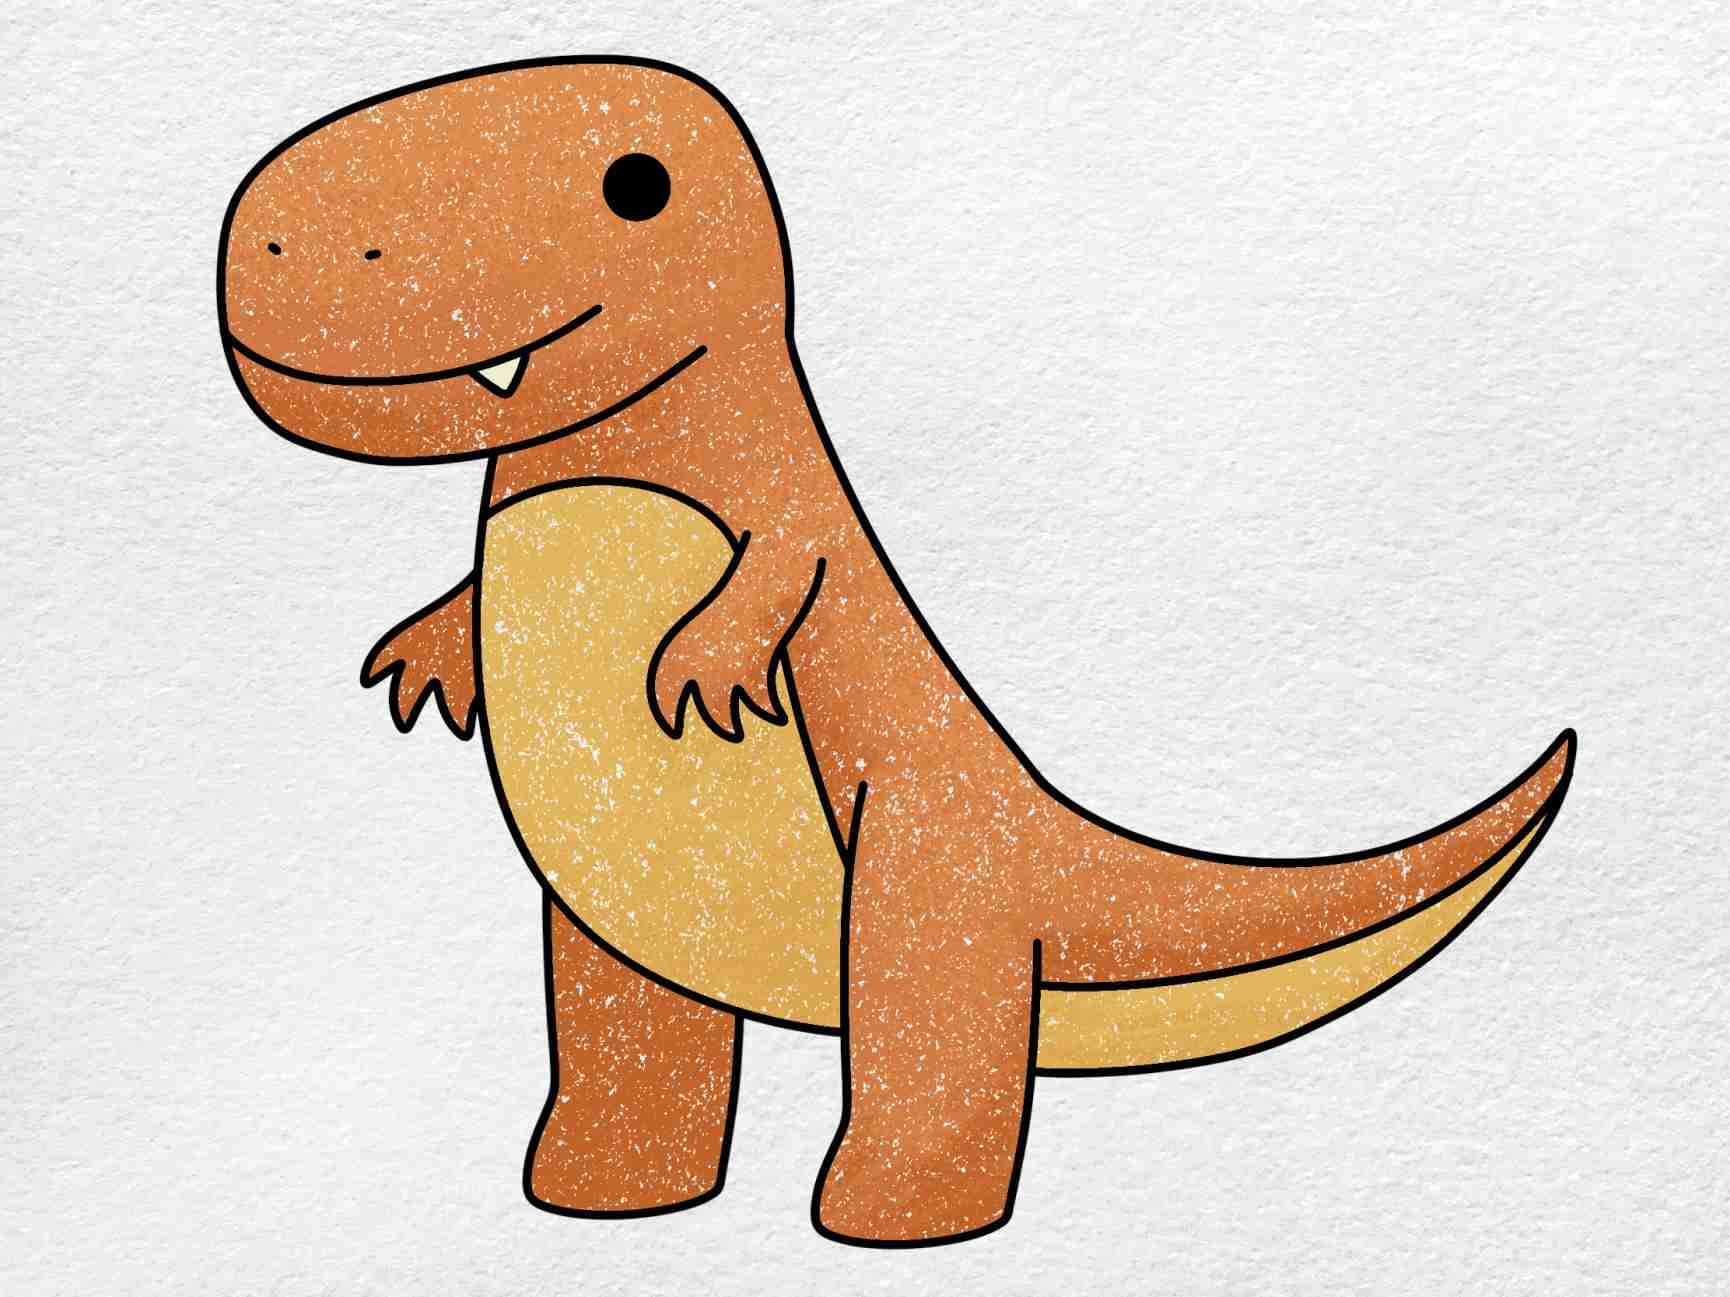 A captivating drawing of a tyrannosaurus rex